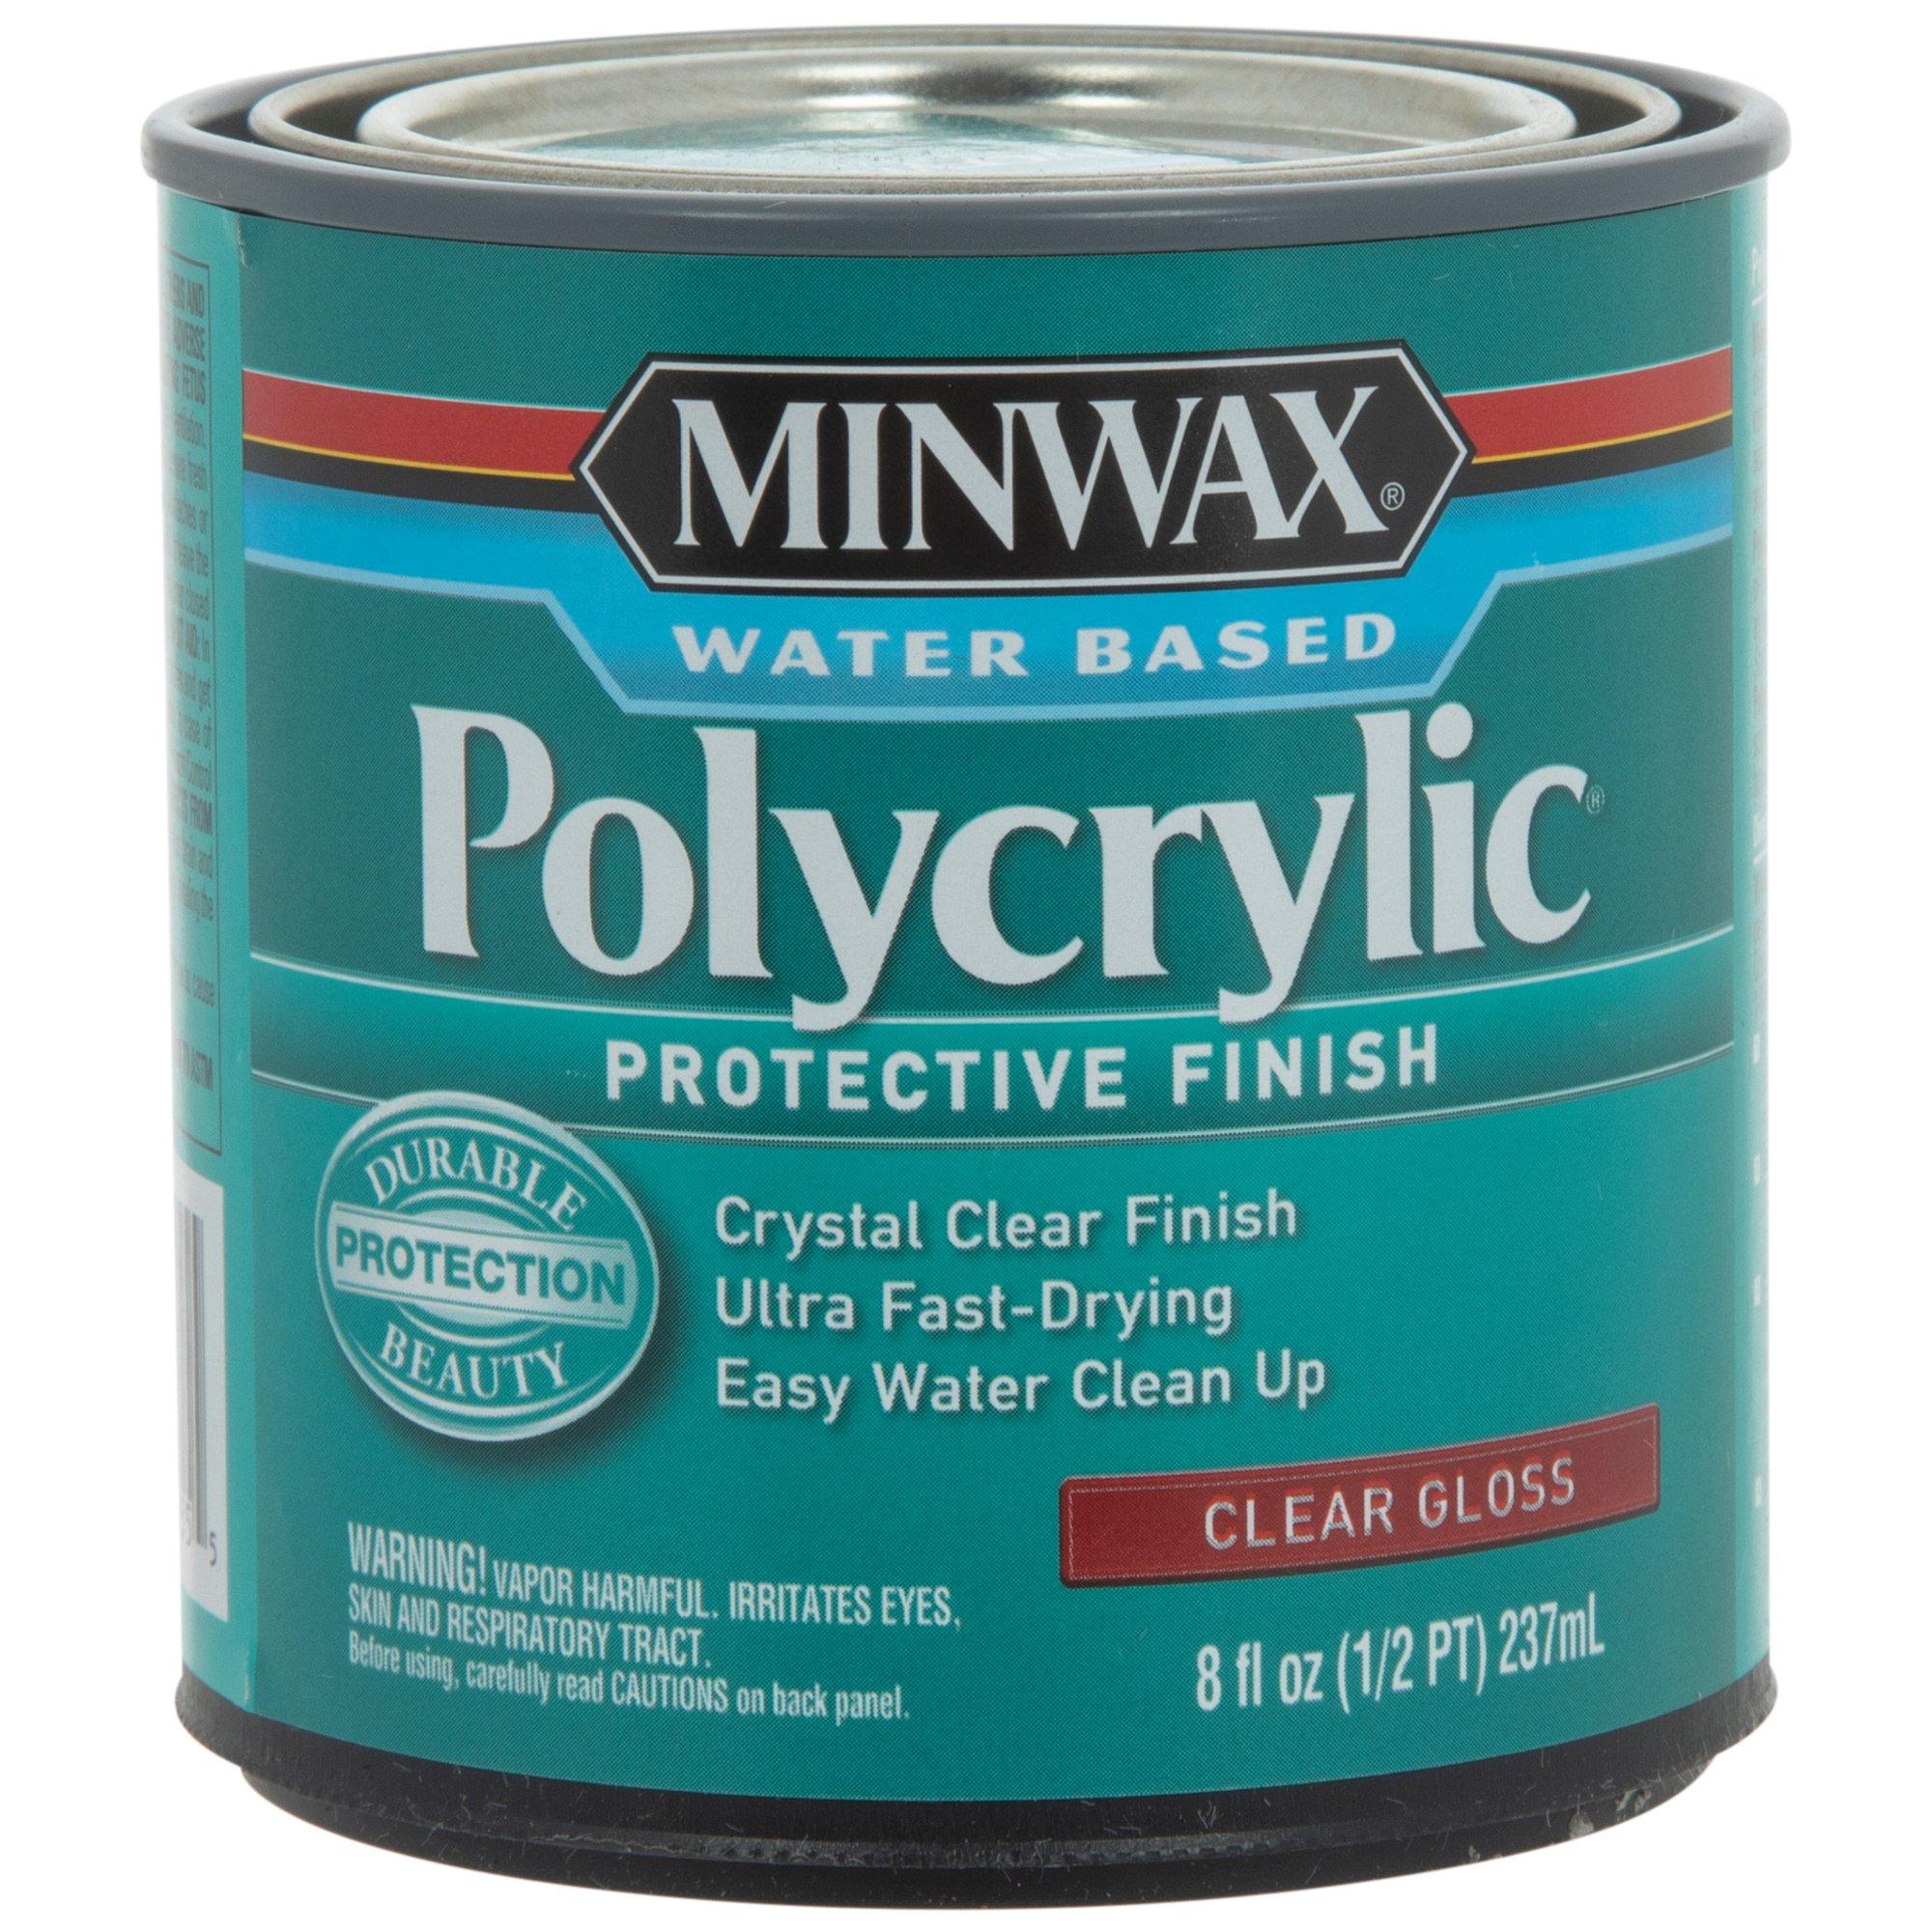 Minwax Satin Clear Polycrylic 1 gal.